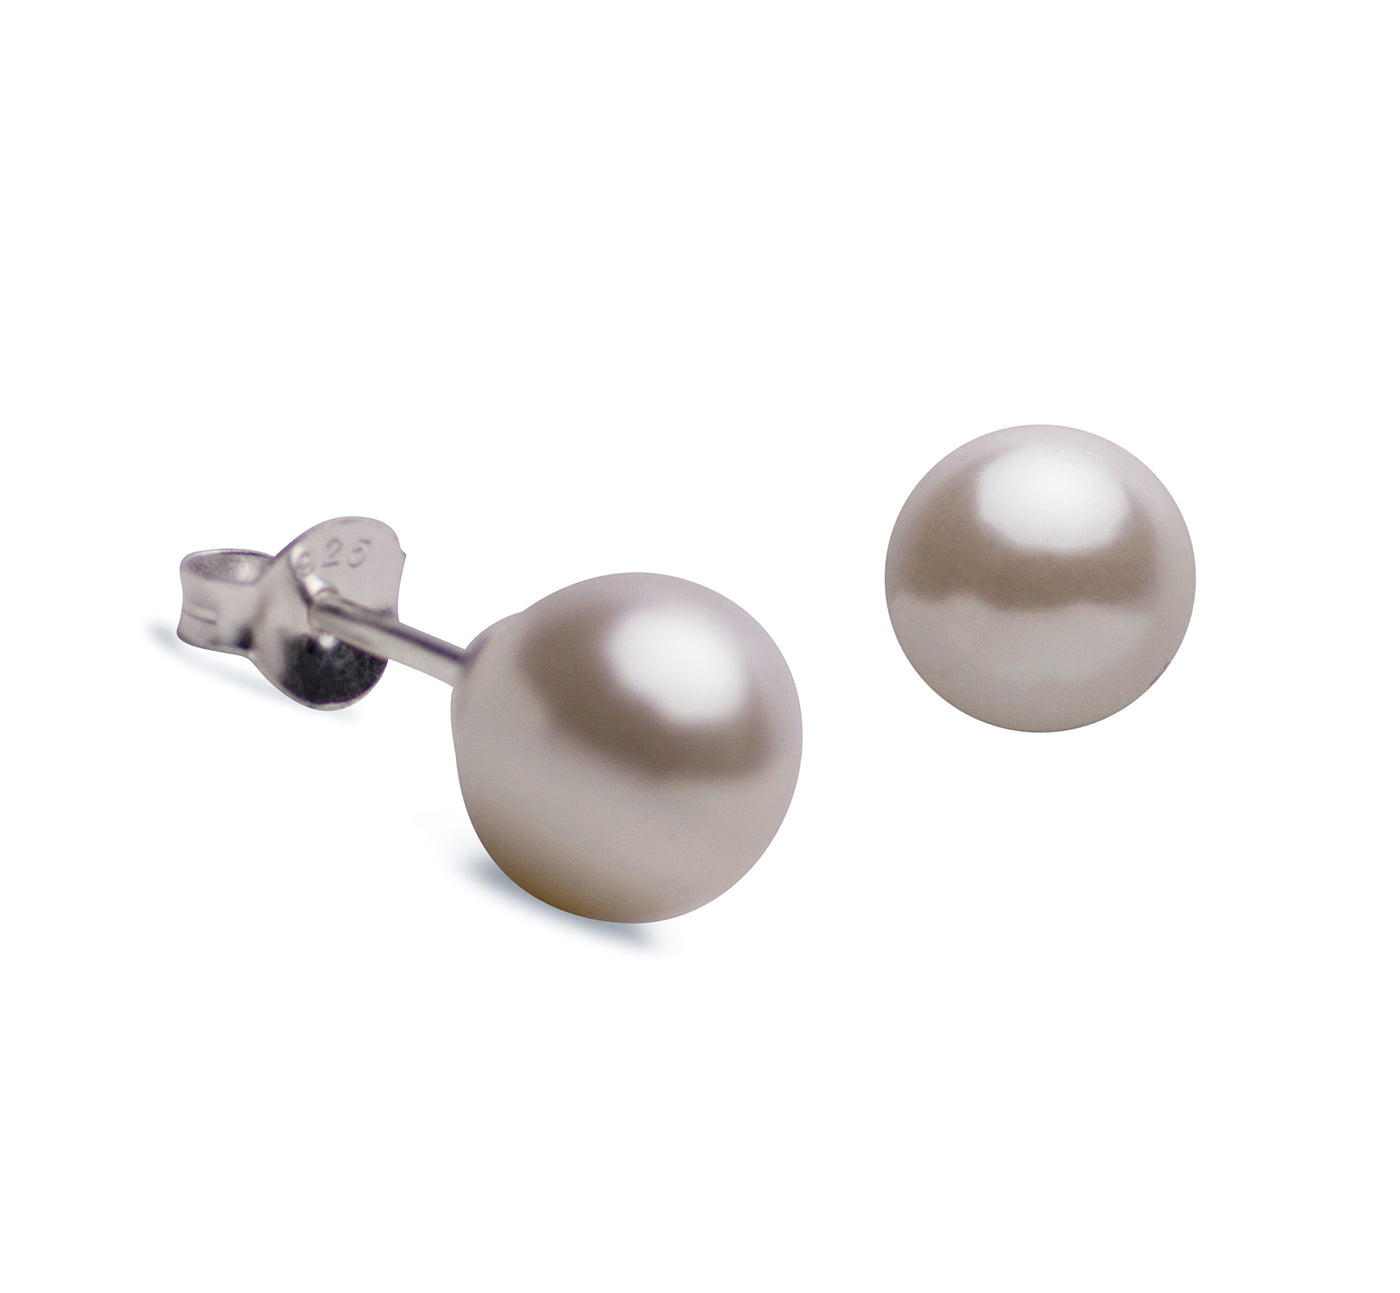 8 mm Gold White Seas Pearl Earrings | SilverAndGold